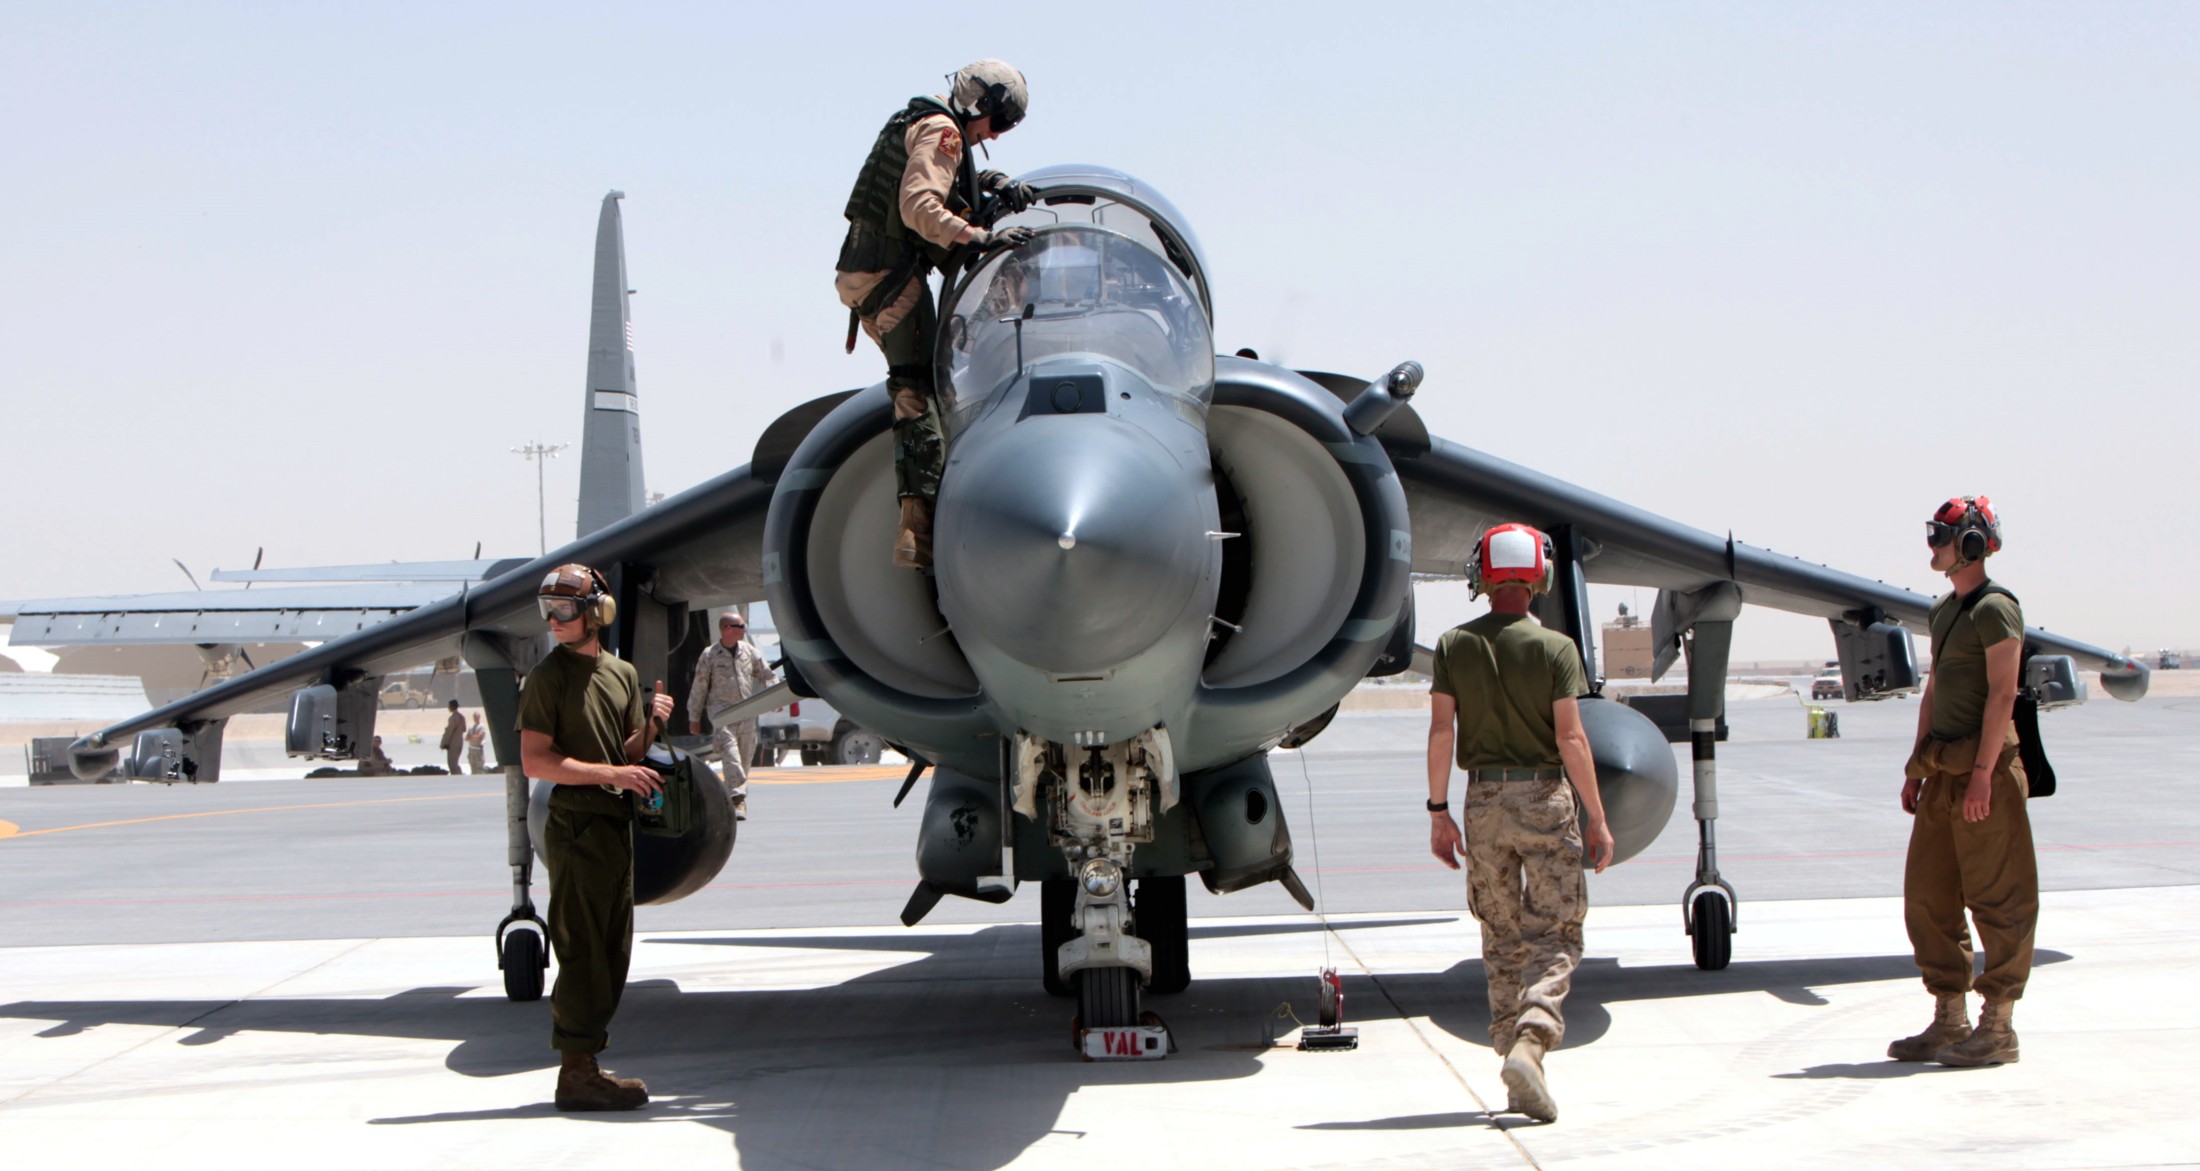 vma-513 flying nightmares av-8b harrier kandahar airfield afghanistan may 2011